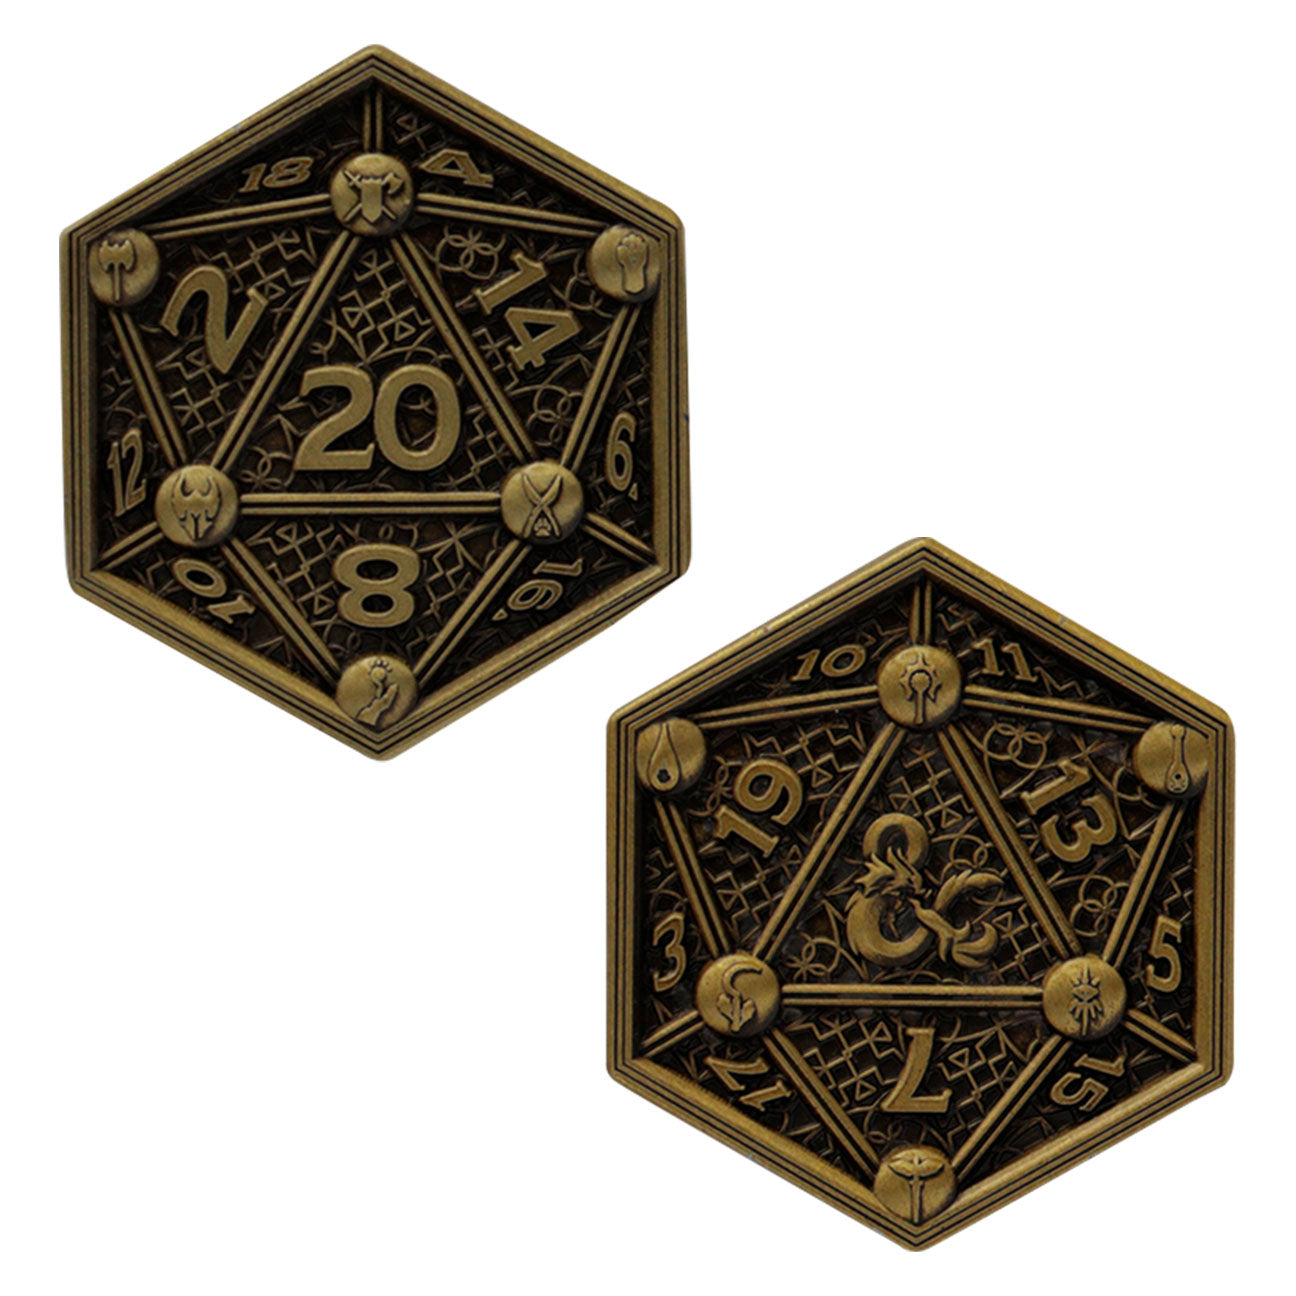 Dungeons & Dragons class cards and D20 flip coin set from Fanattik